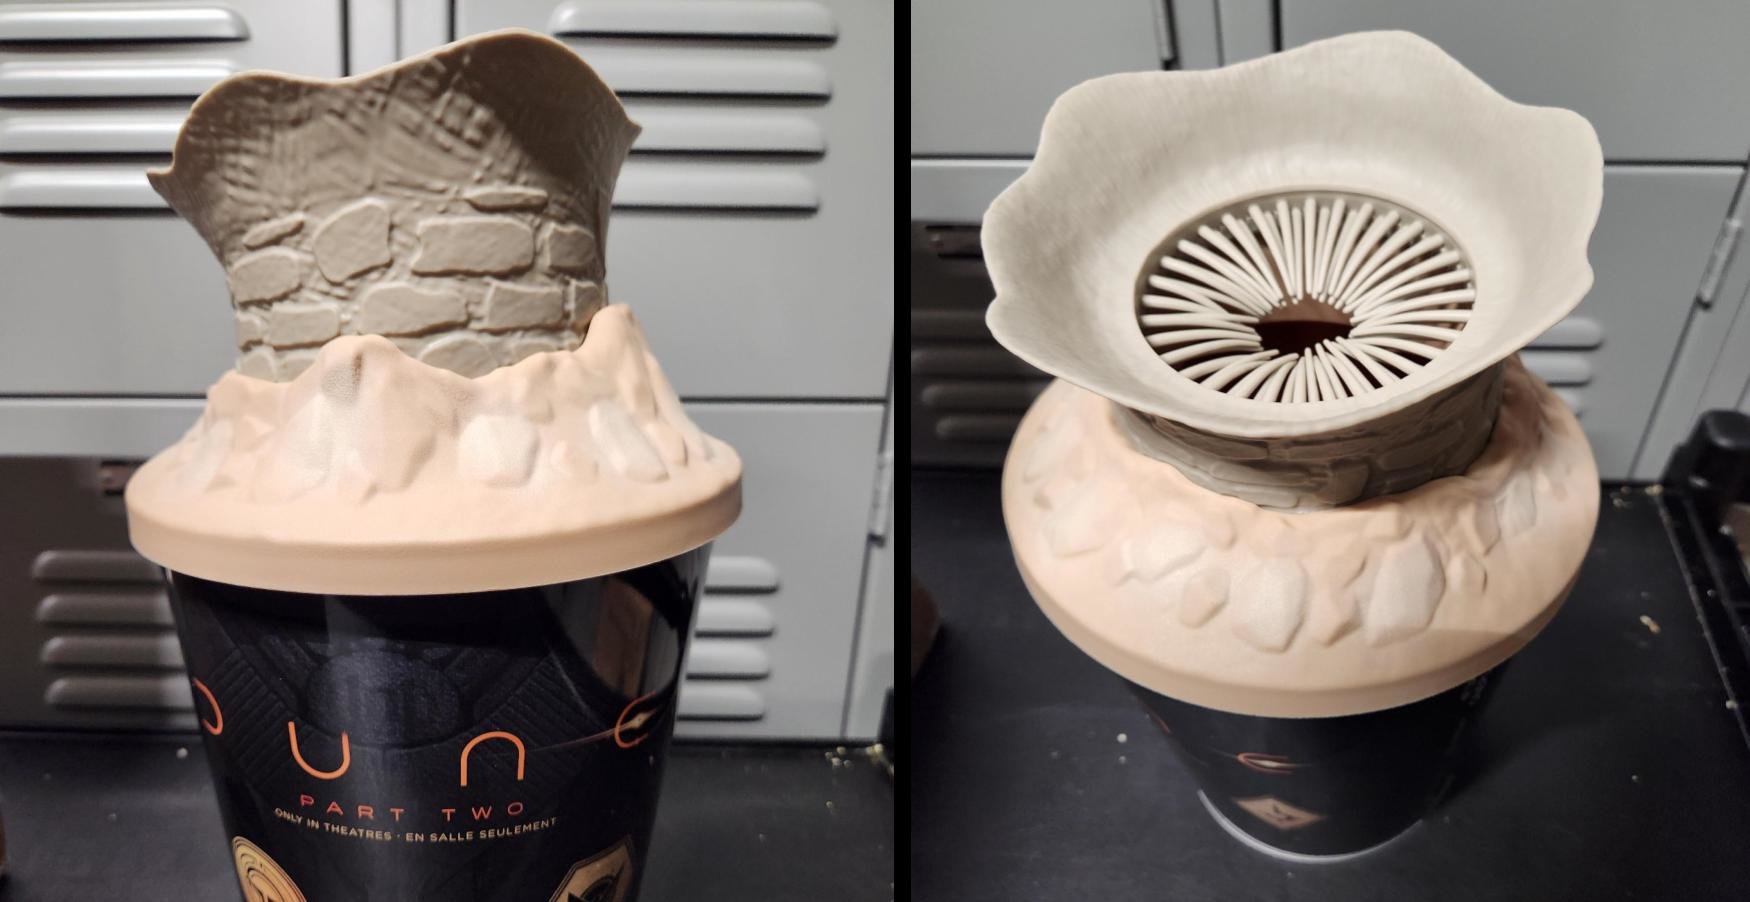 ‘Dune 2’ Sandworm Popcorn Bucket Sparks Controversy Online